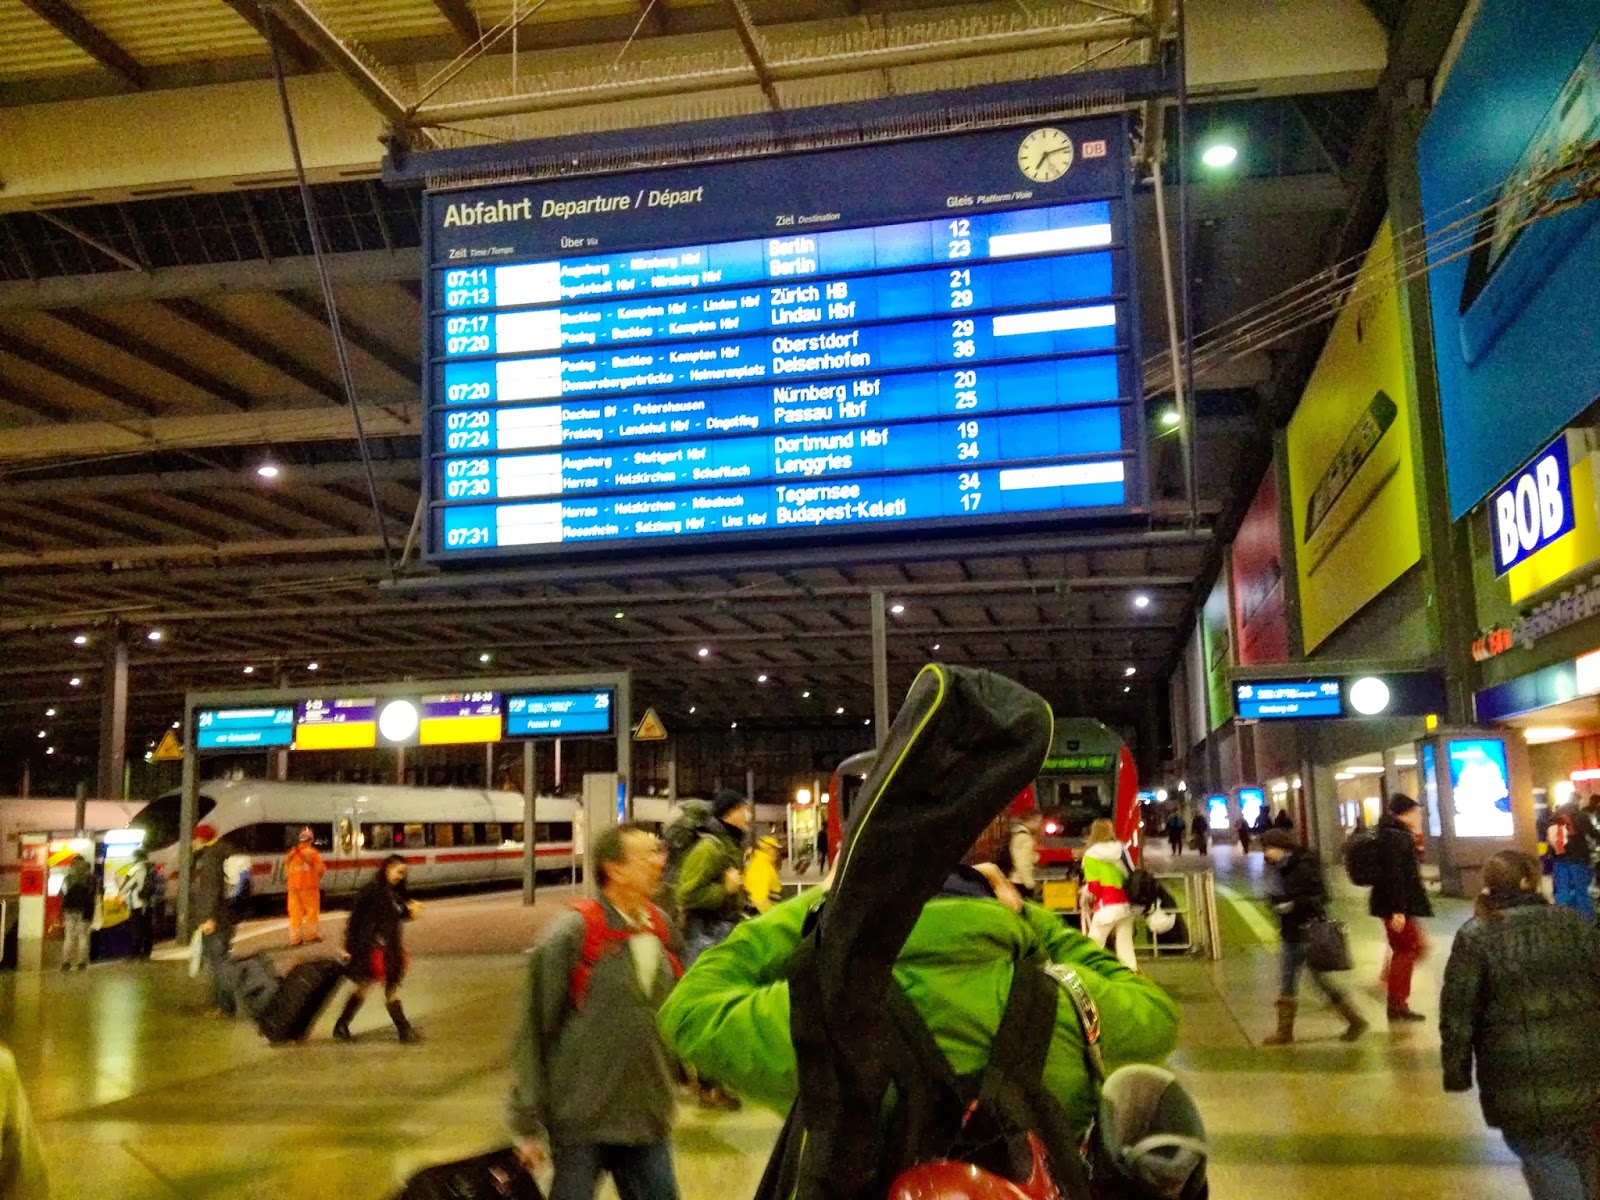 Looking for the Garmish ski train in Munich's Hauptbahnhof